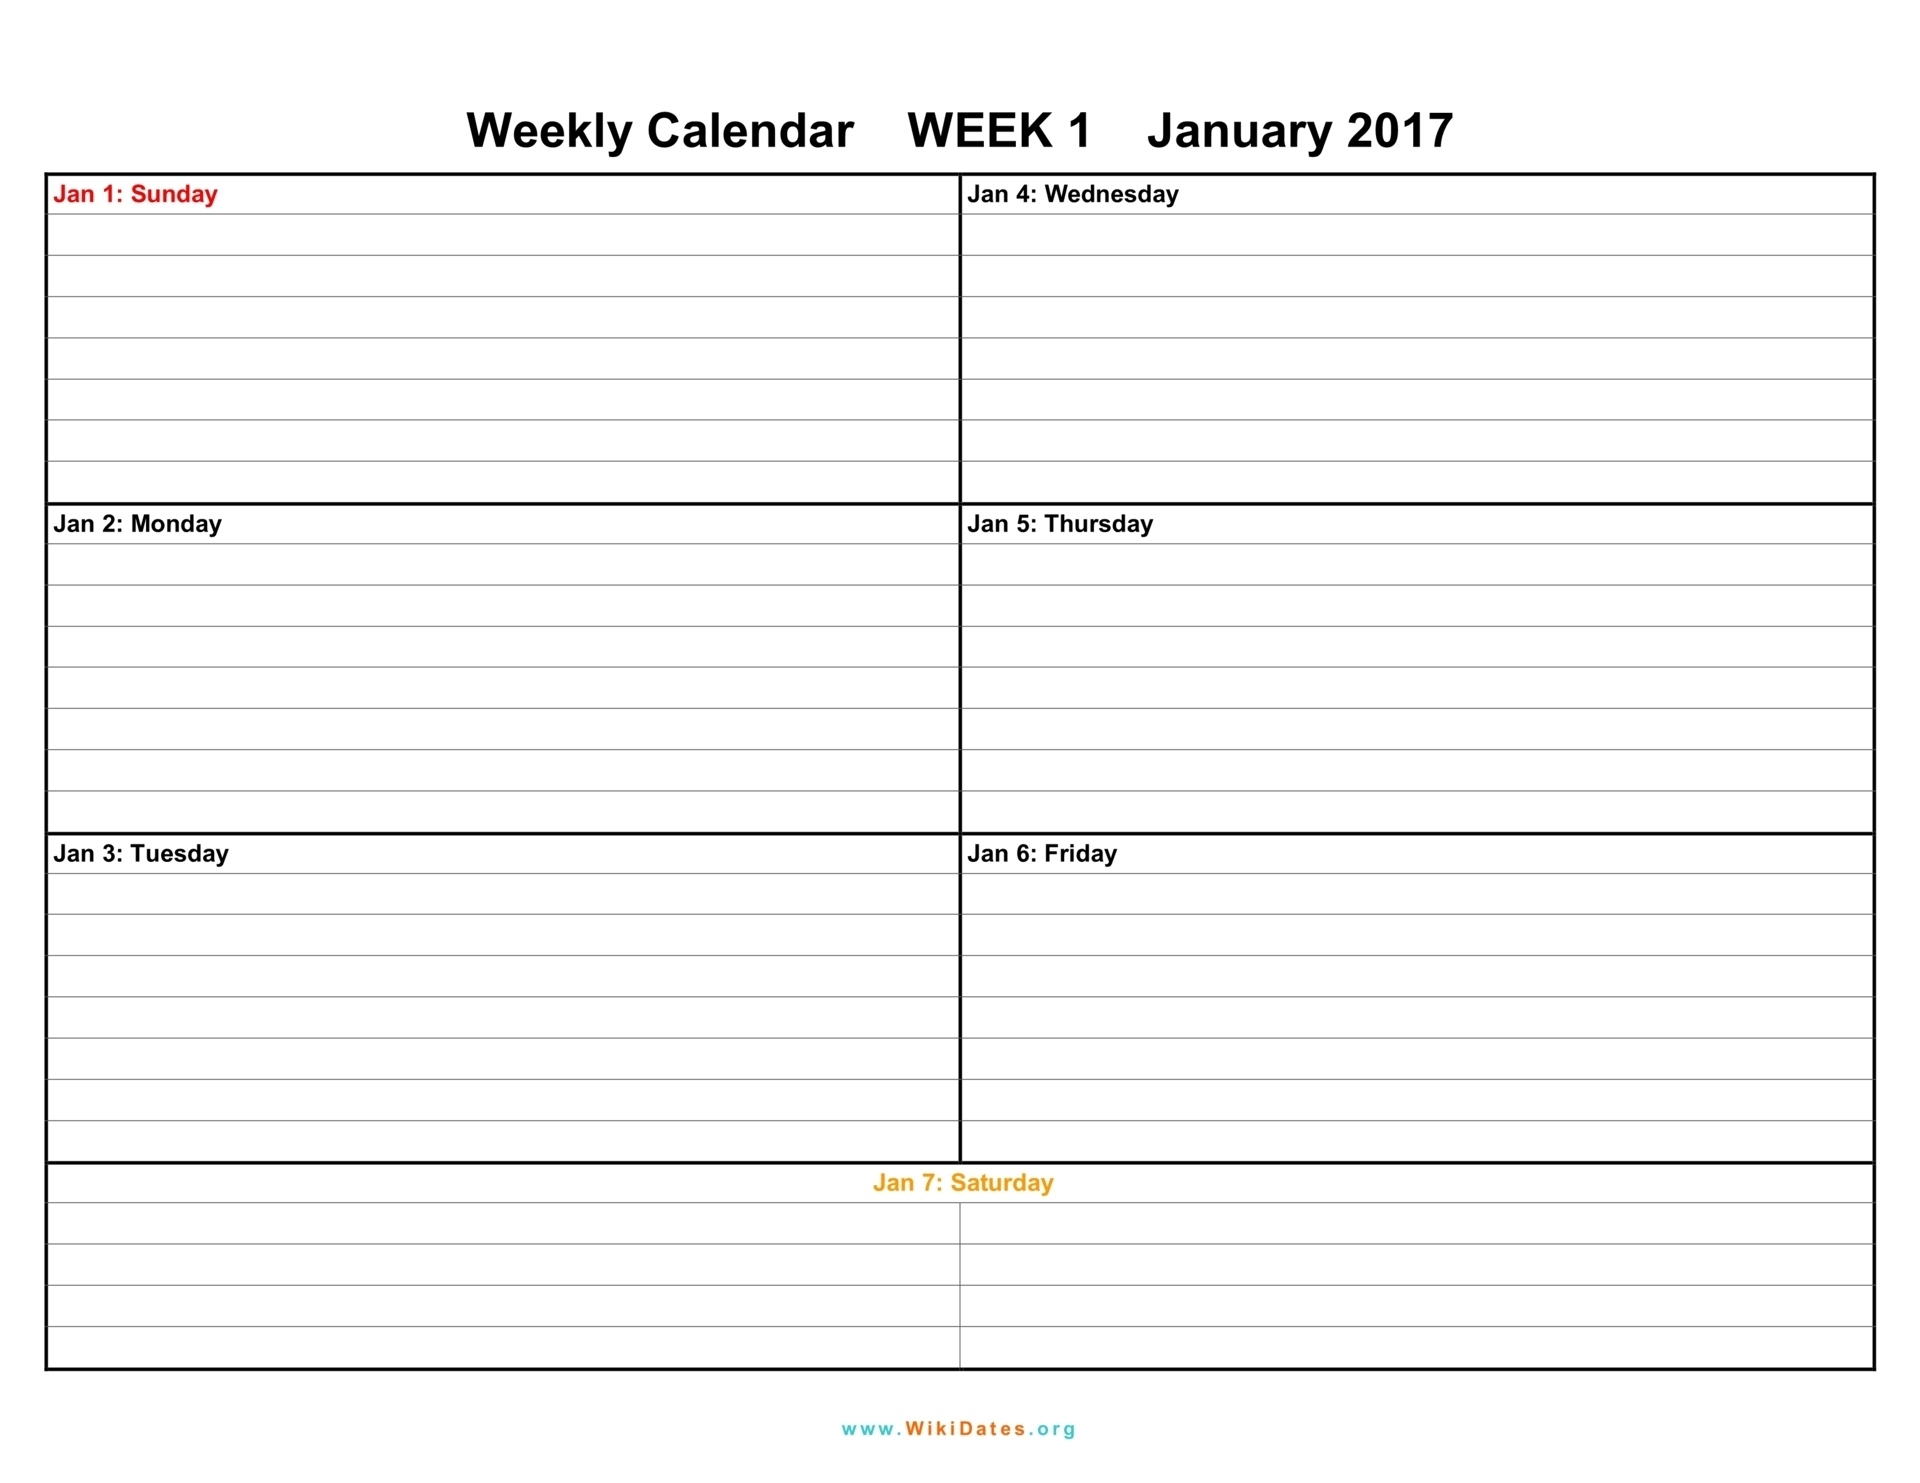 Schedule Template Printable Weekly Calendar Free E2 80 93 Kairo Exceptional 4 Week Calendar Blank